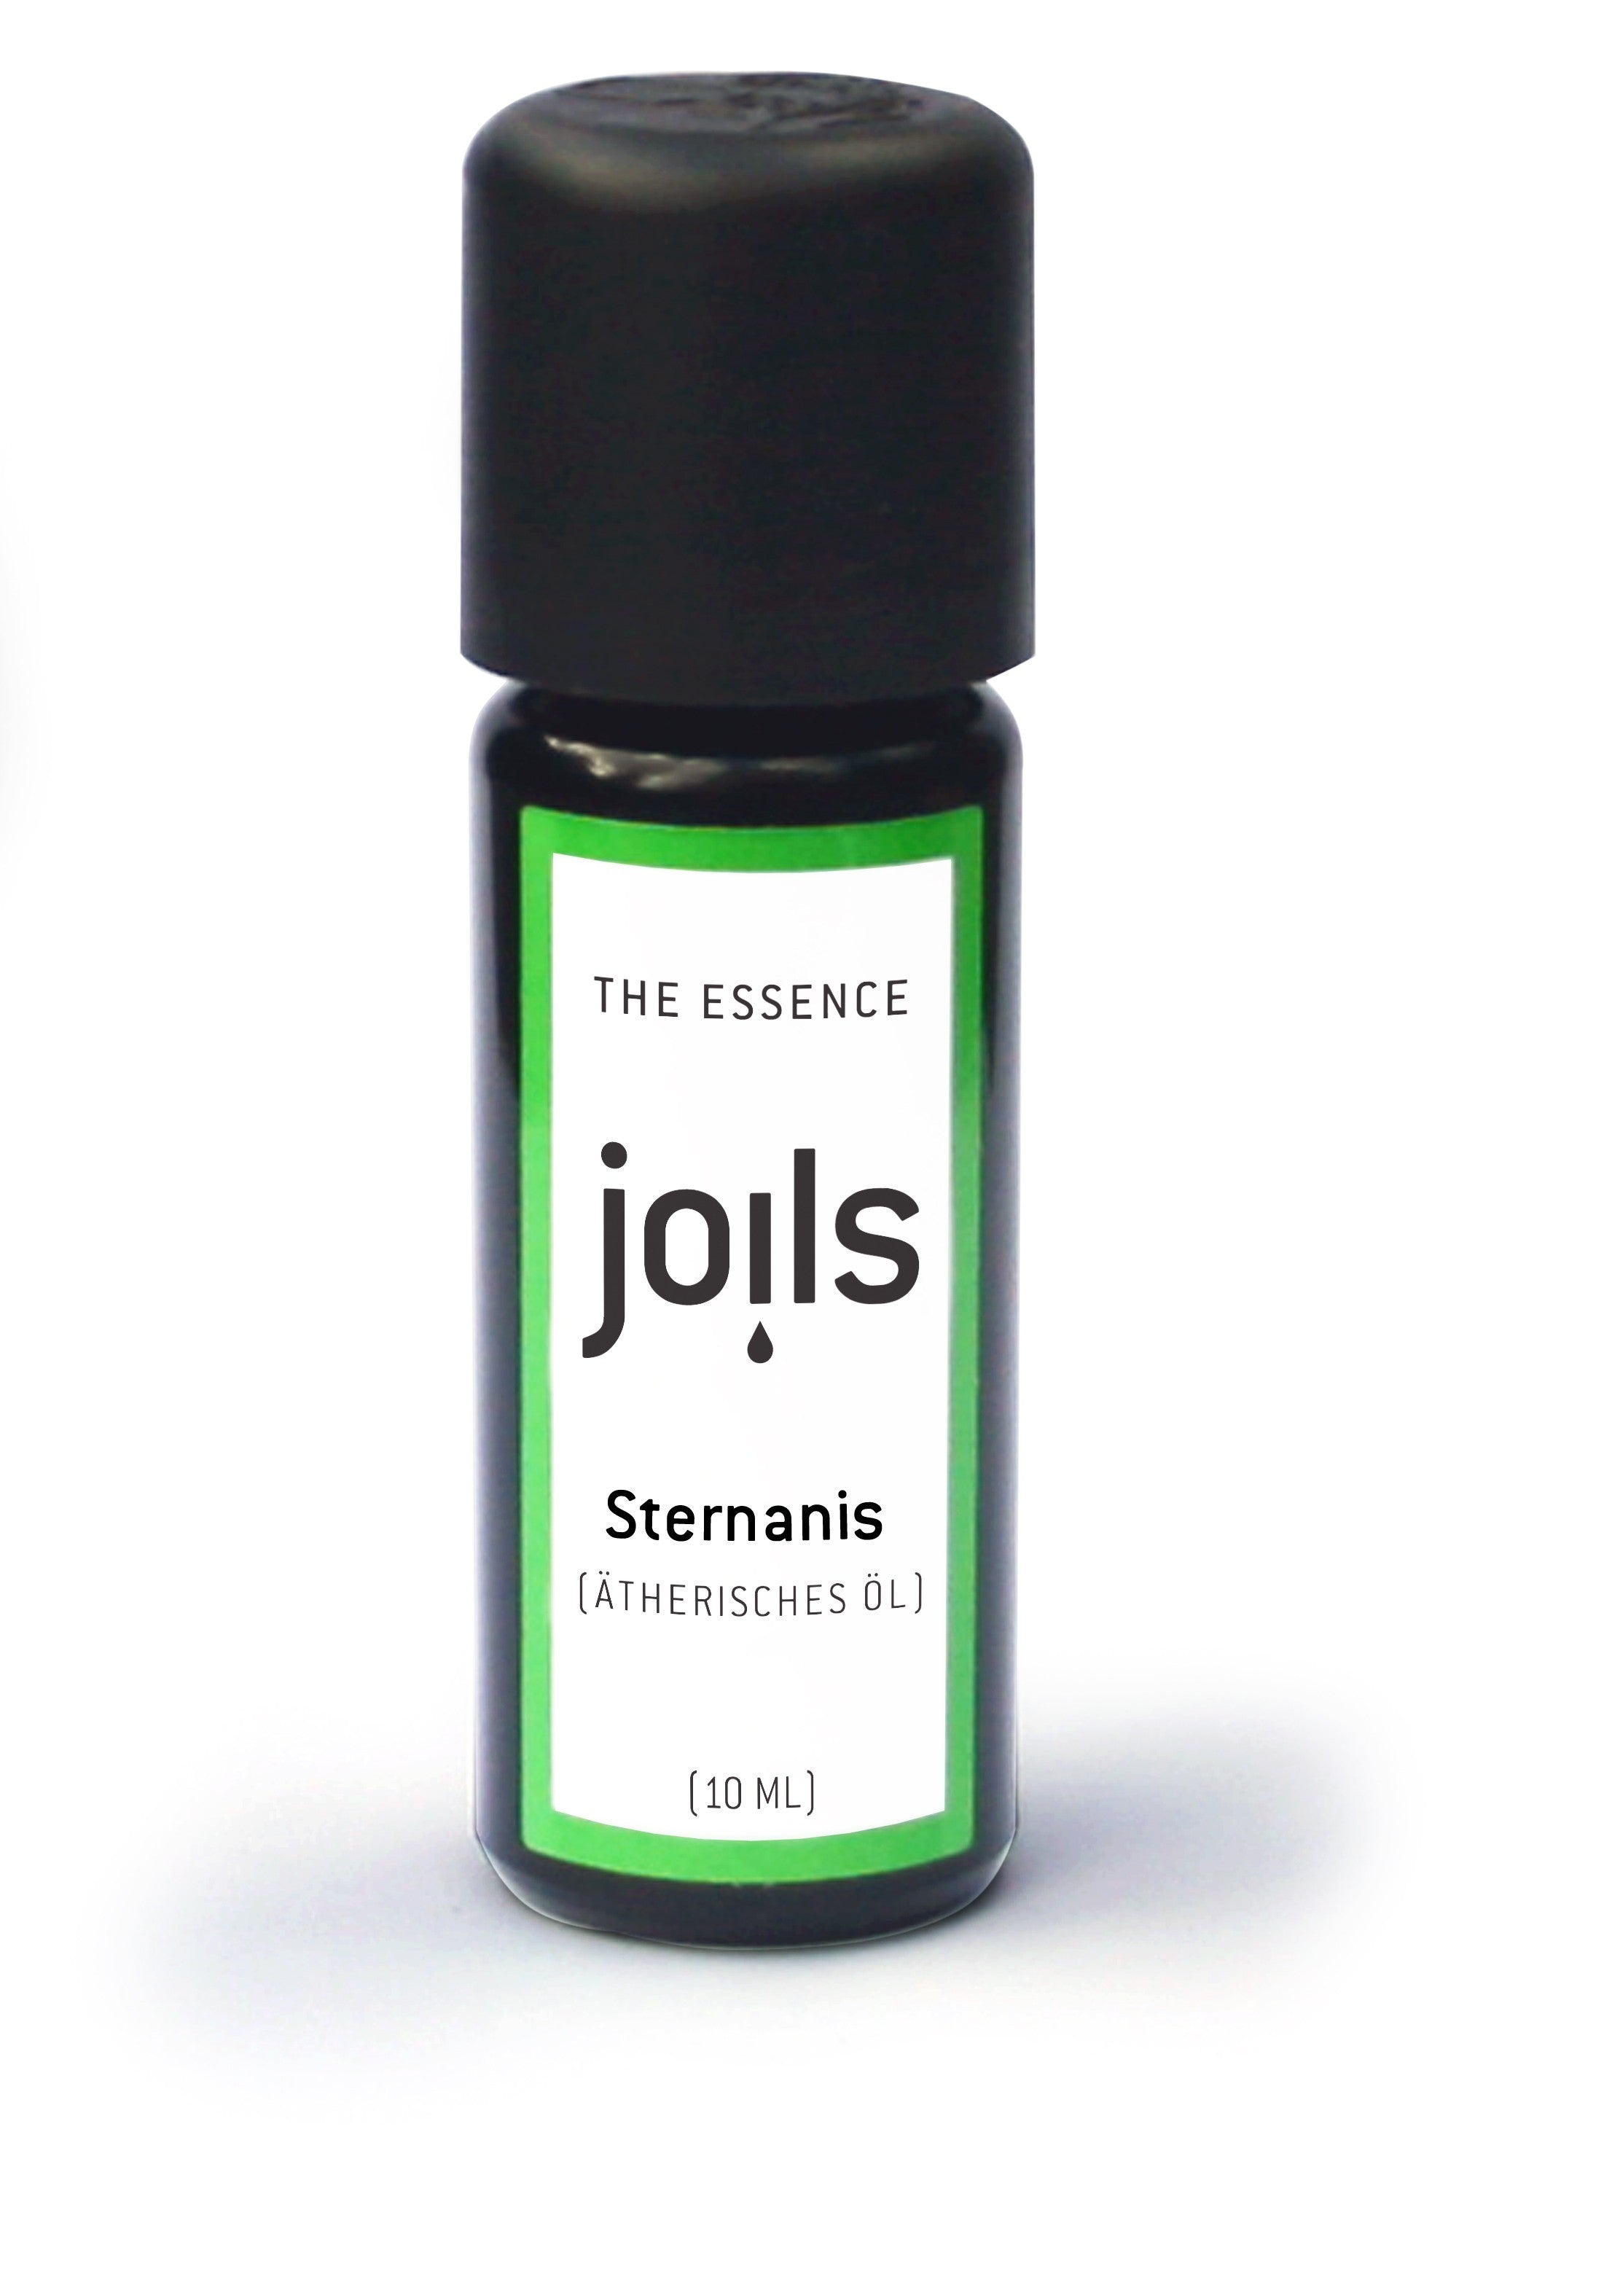 STERNANIS 10ml - Joils